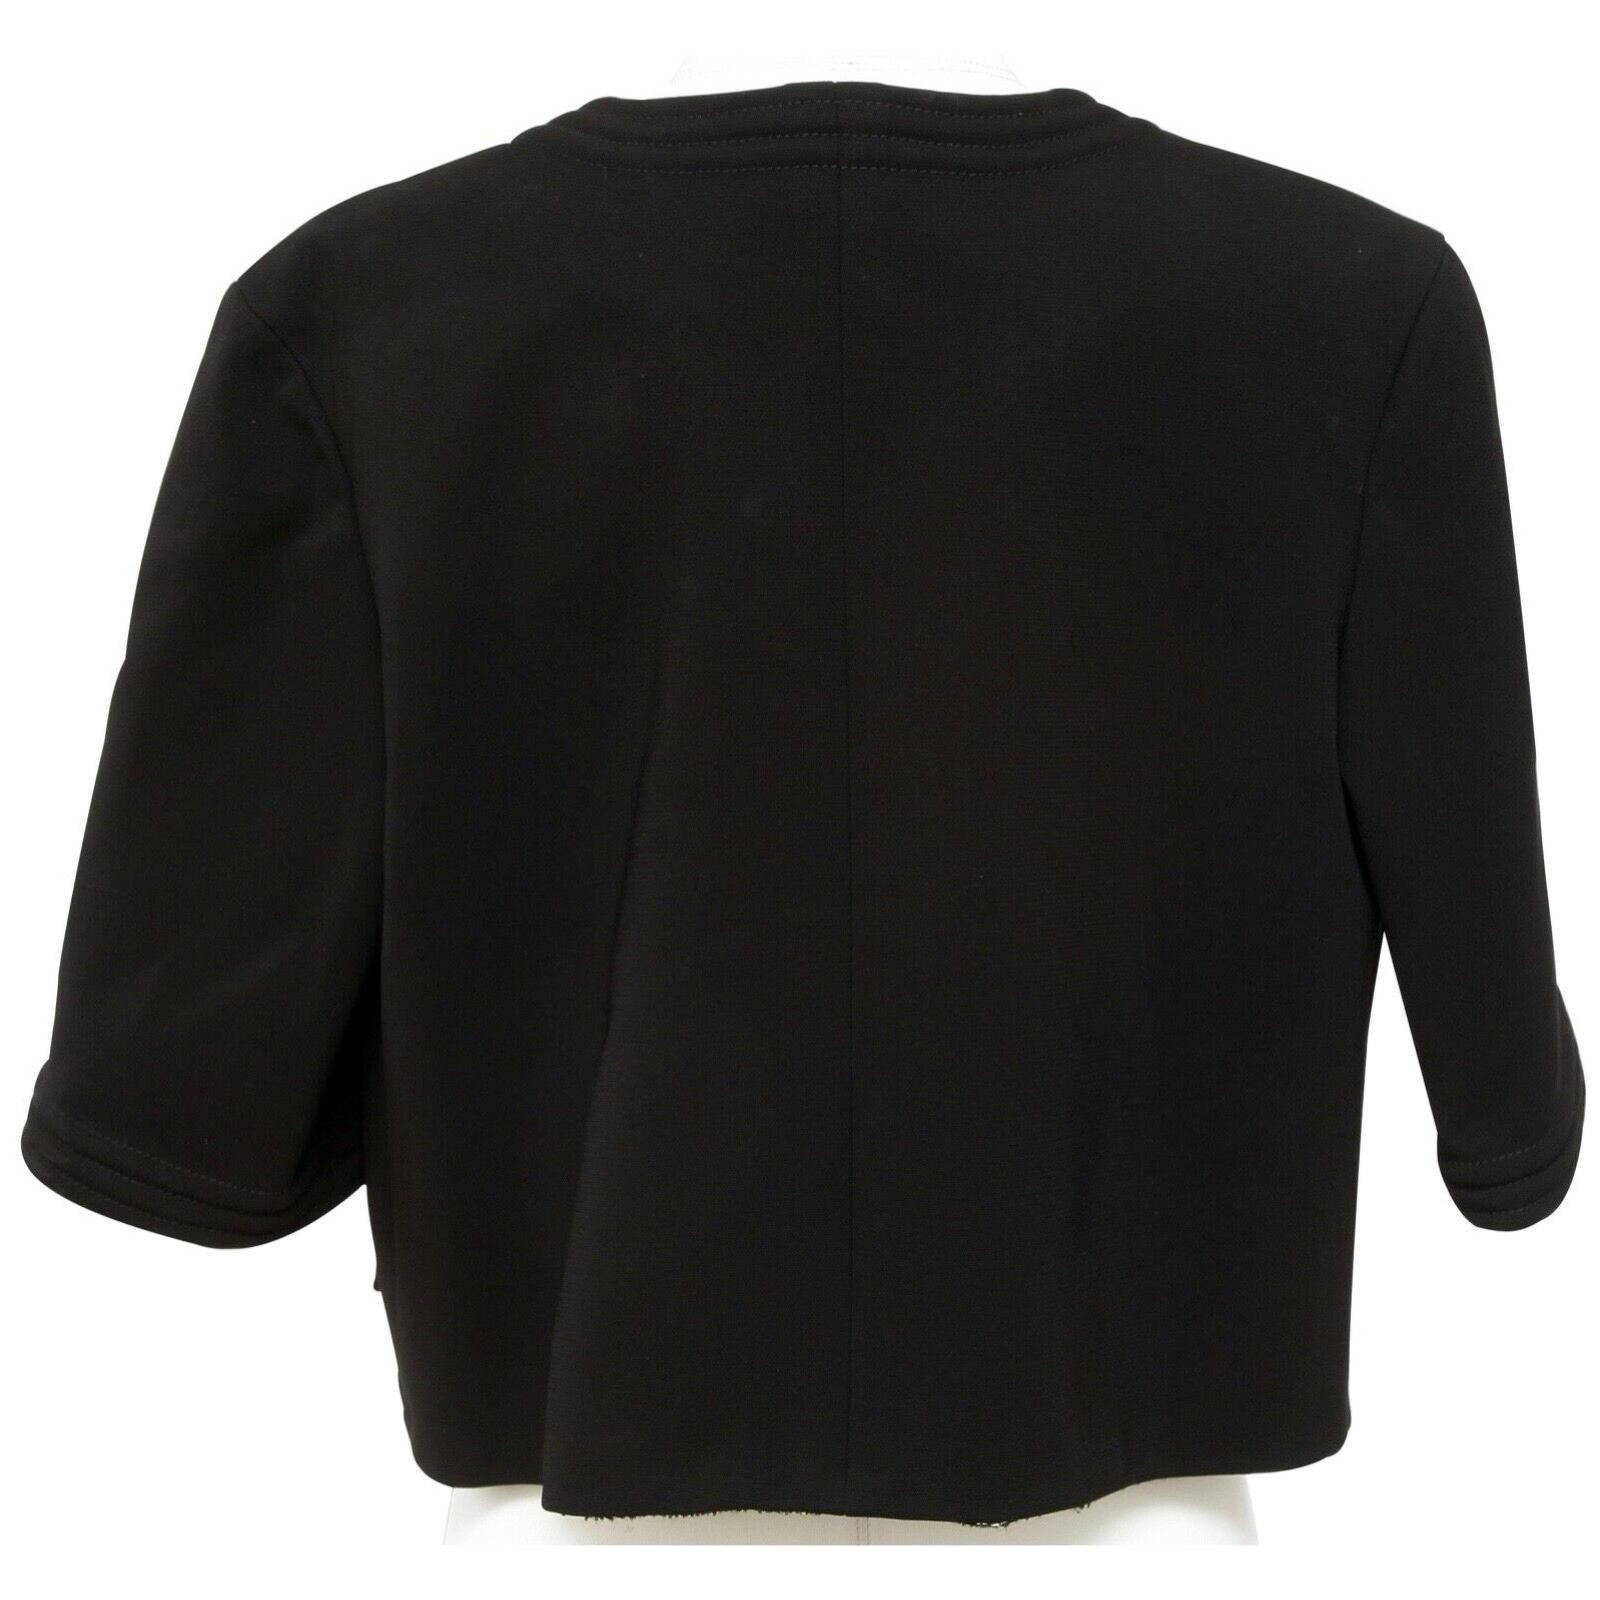 Women's CHANEL Jacket Blazer Black Cropped Collarless Metallic Open Front 38 Fall 2012